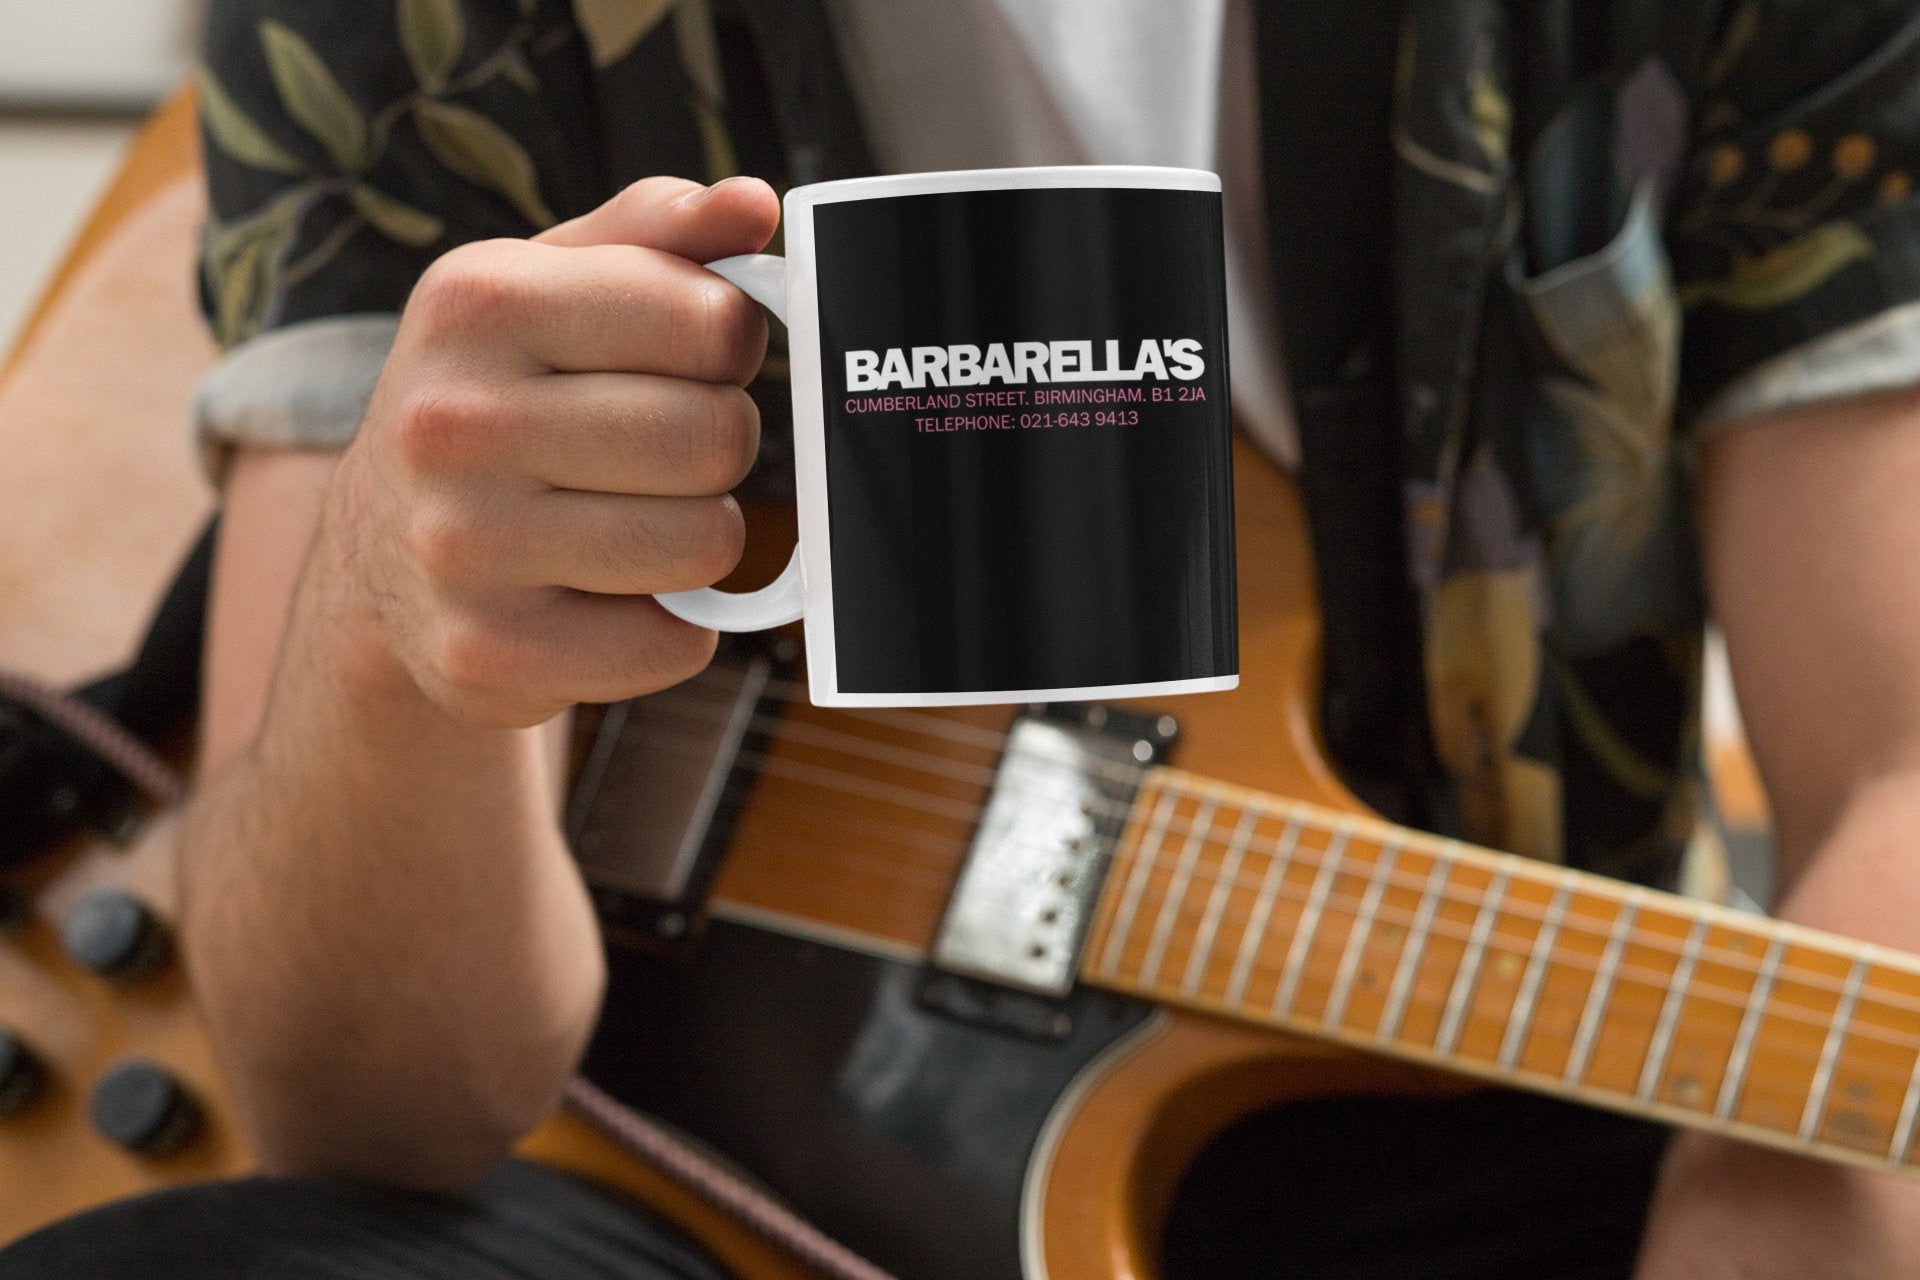 Barbarella's mug - Dirty Stop Outs